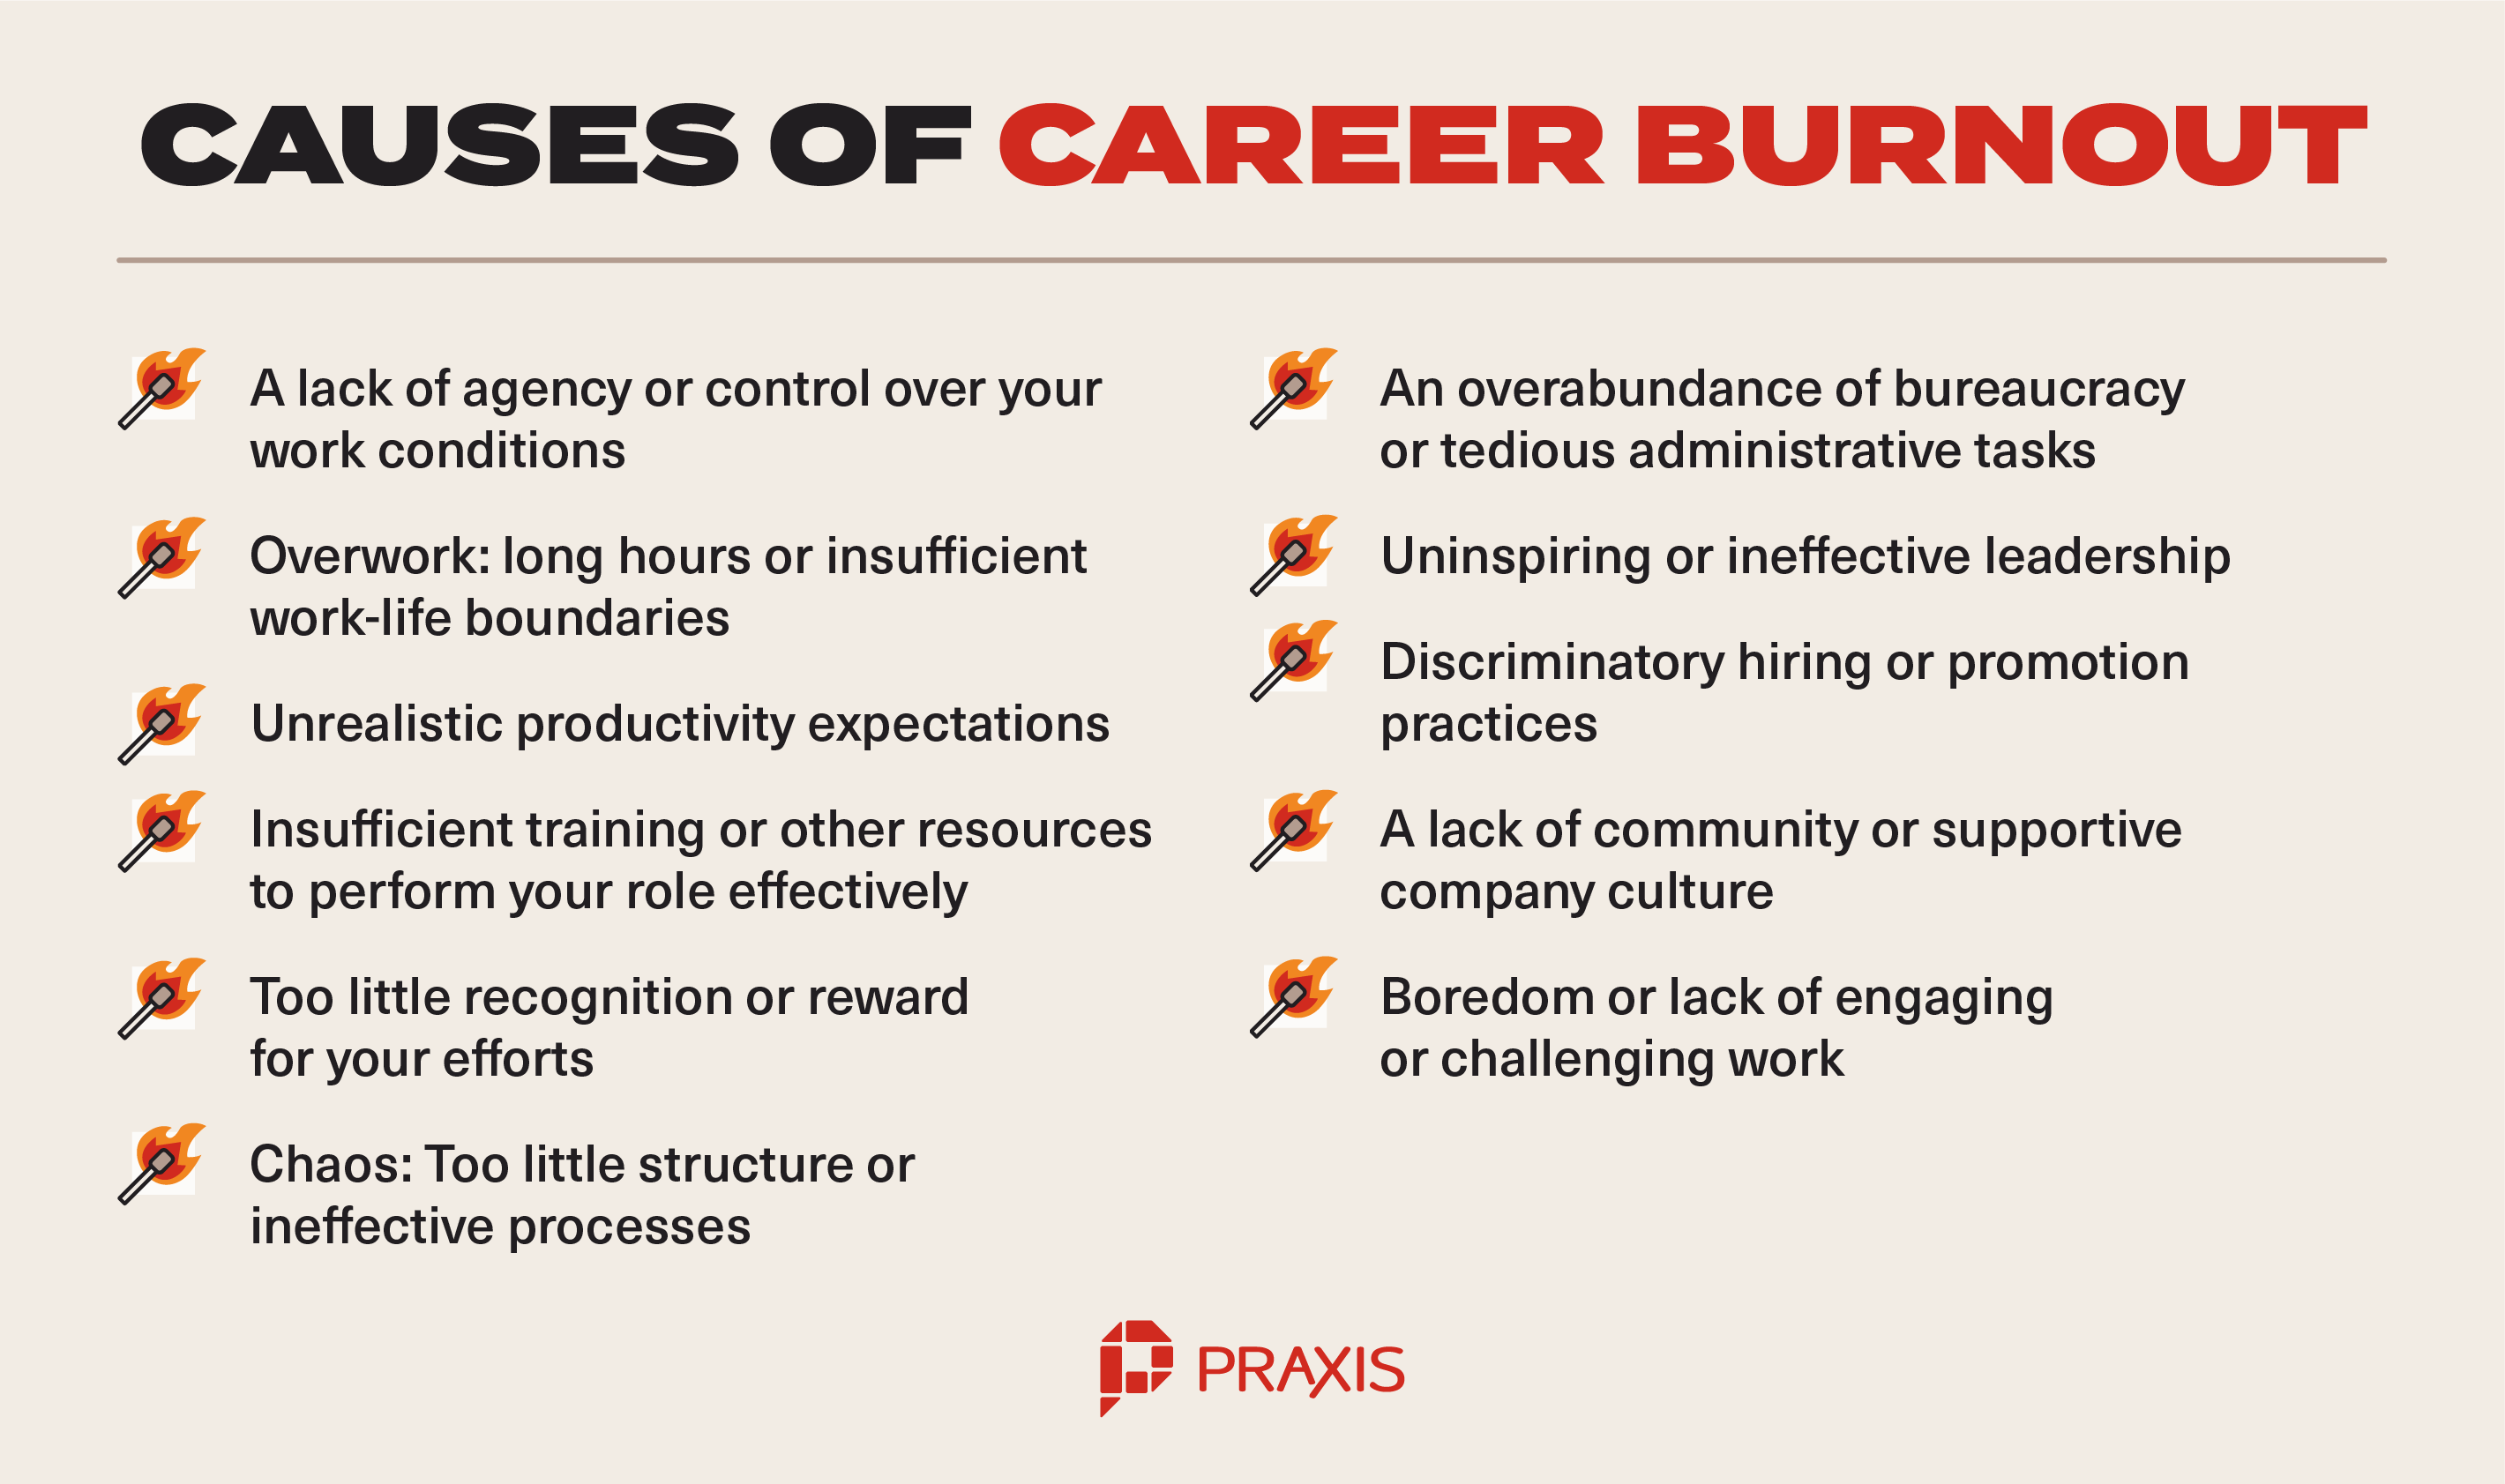 What Causes Career Burnout?